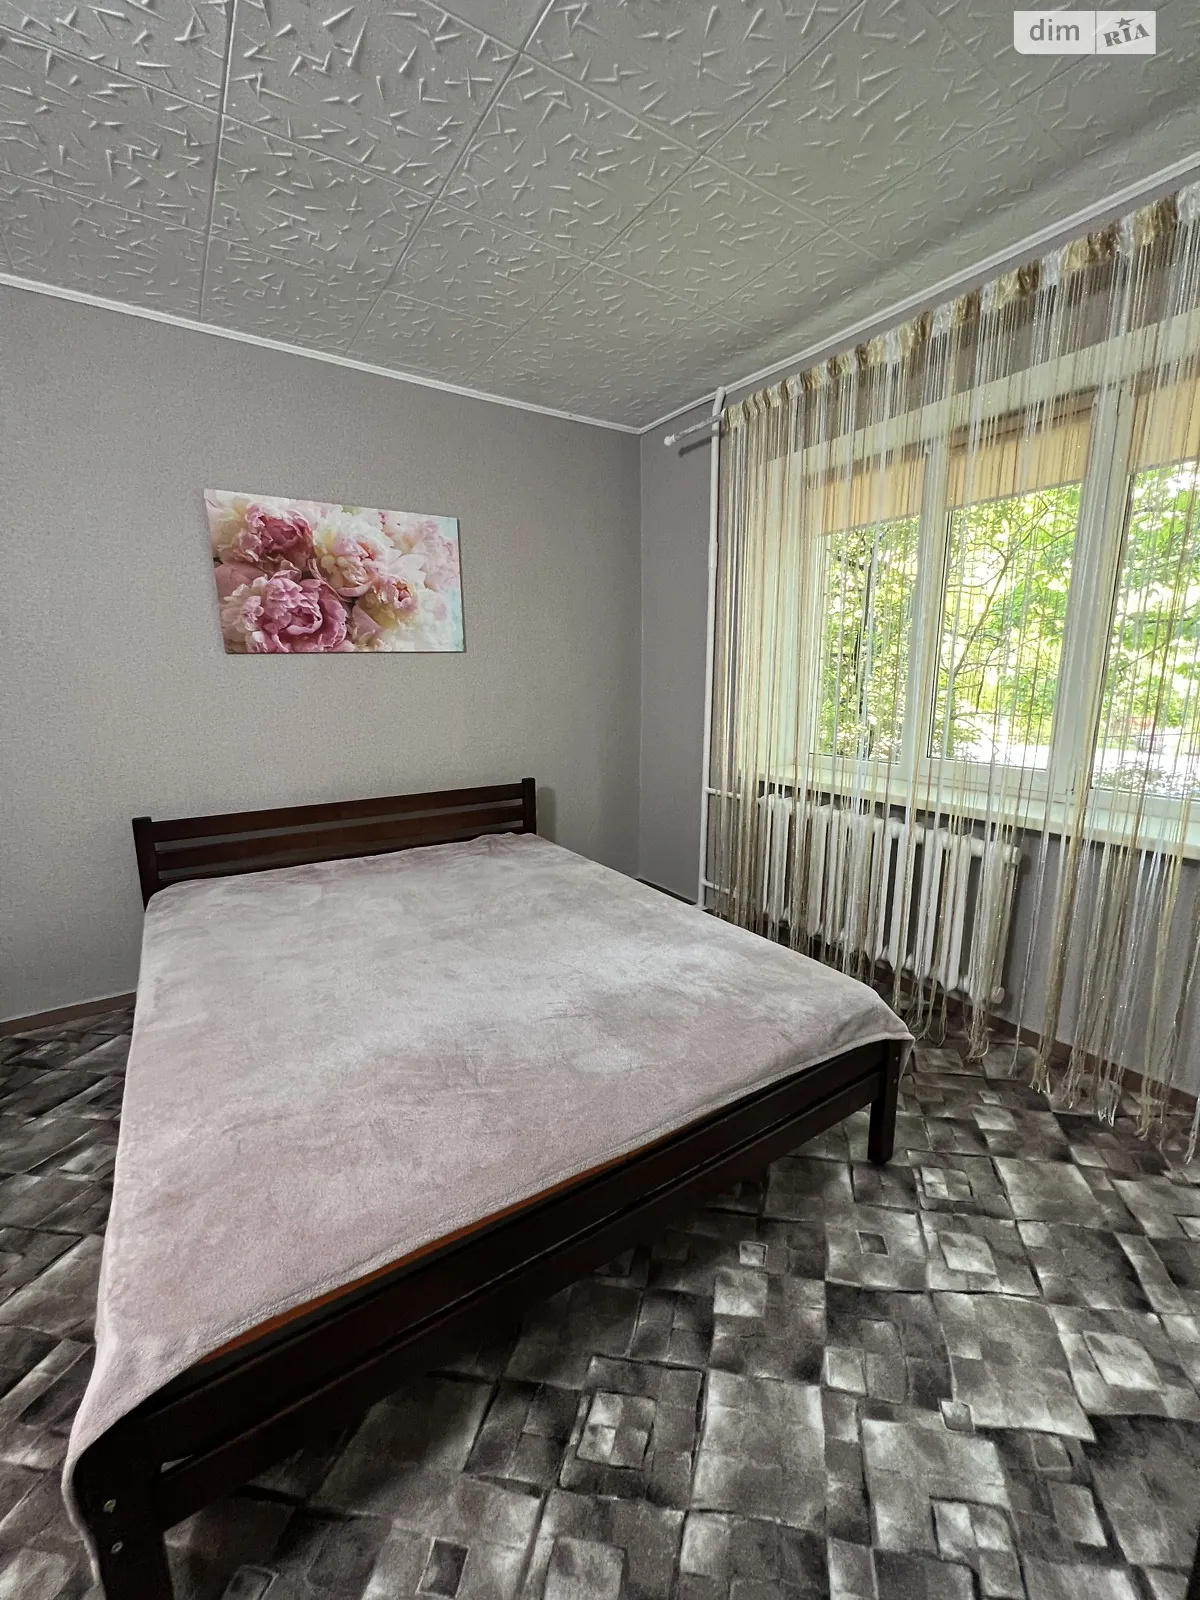 1-кімнатна квартира у Запоріжжі, цена: 700 грн